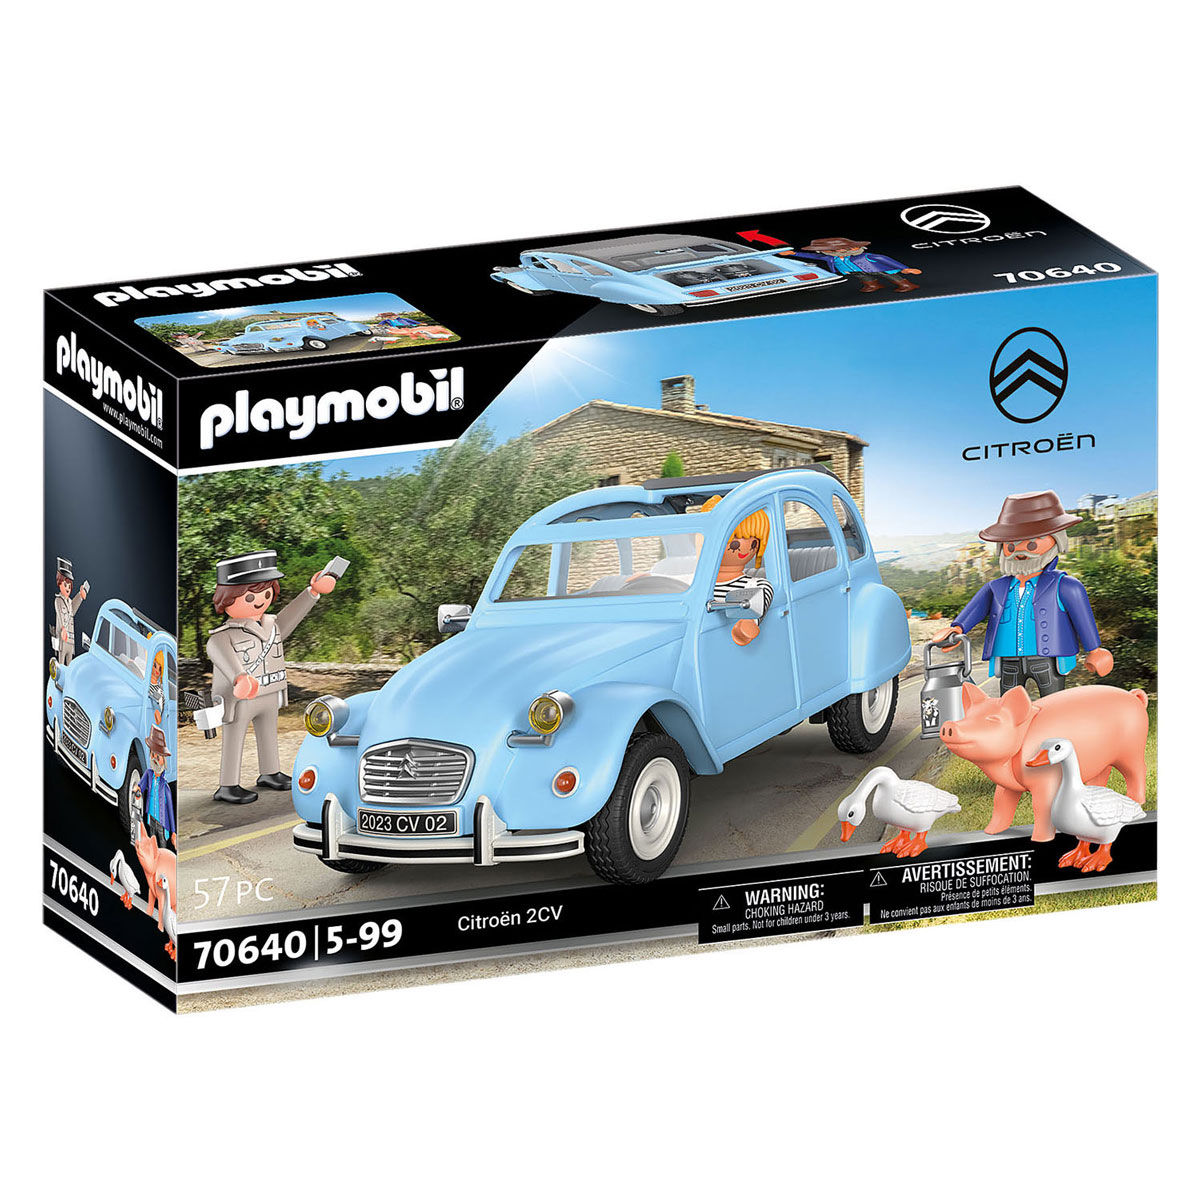 Personnalisez votre Volkswagen Playmobil !